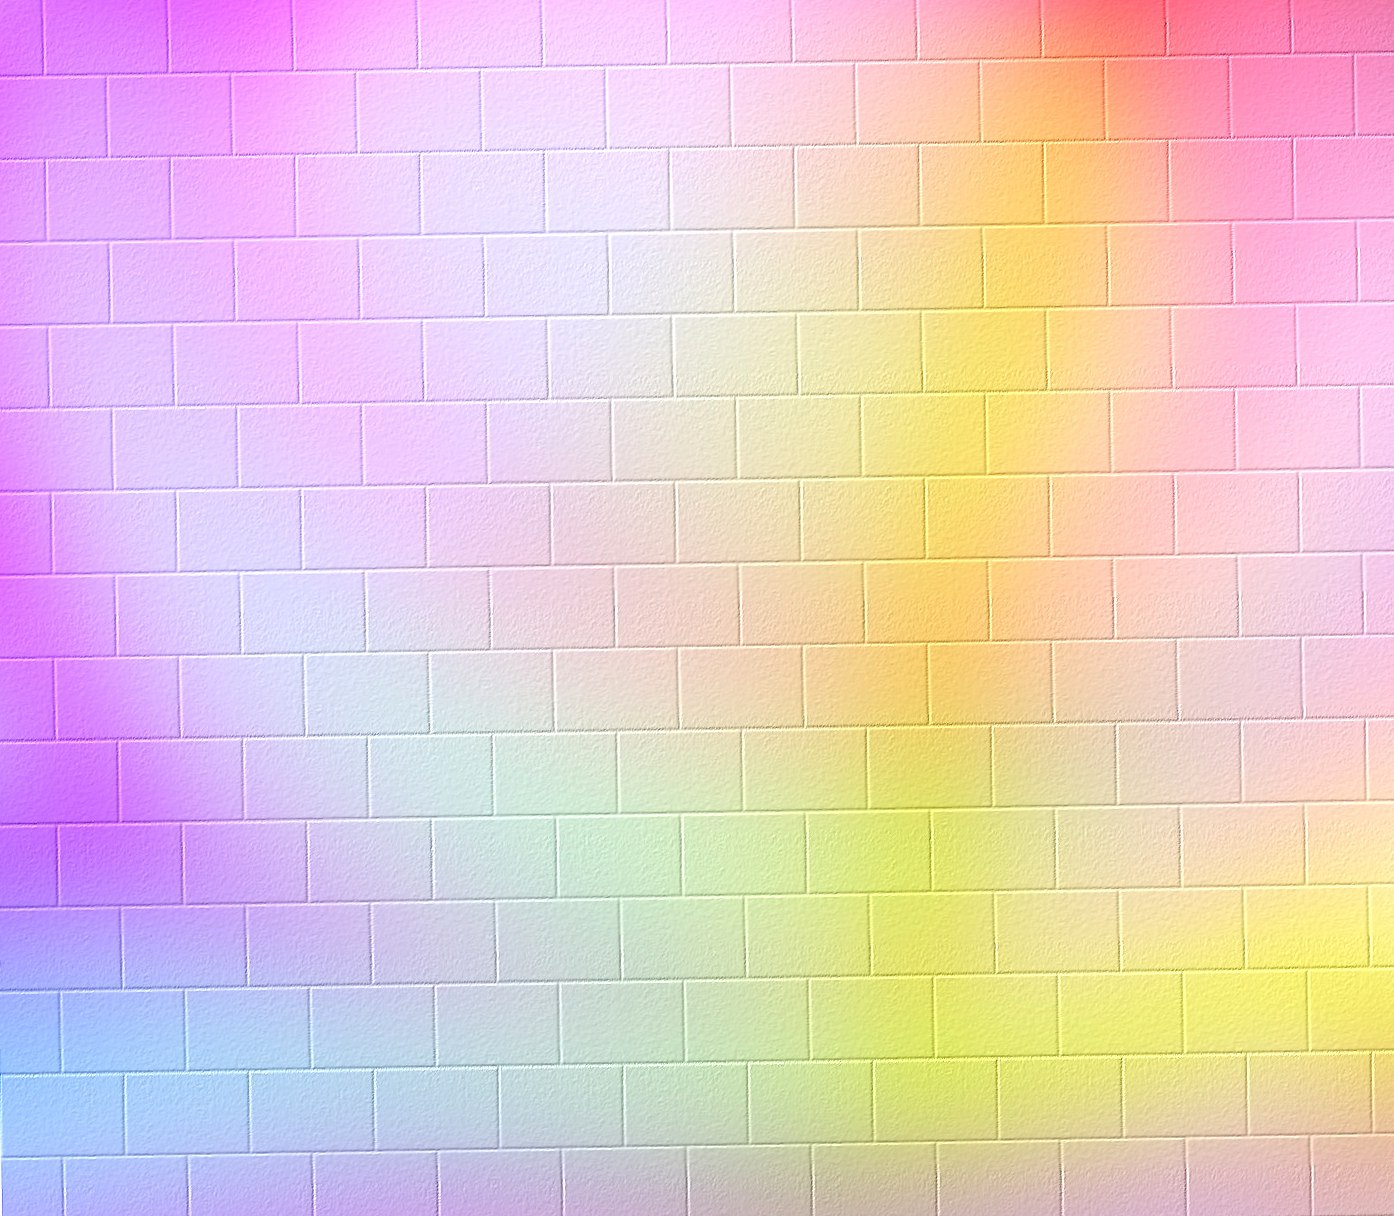 Color Bricks LG 2017 wallpapers HD quality